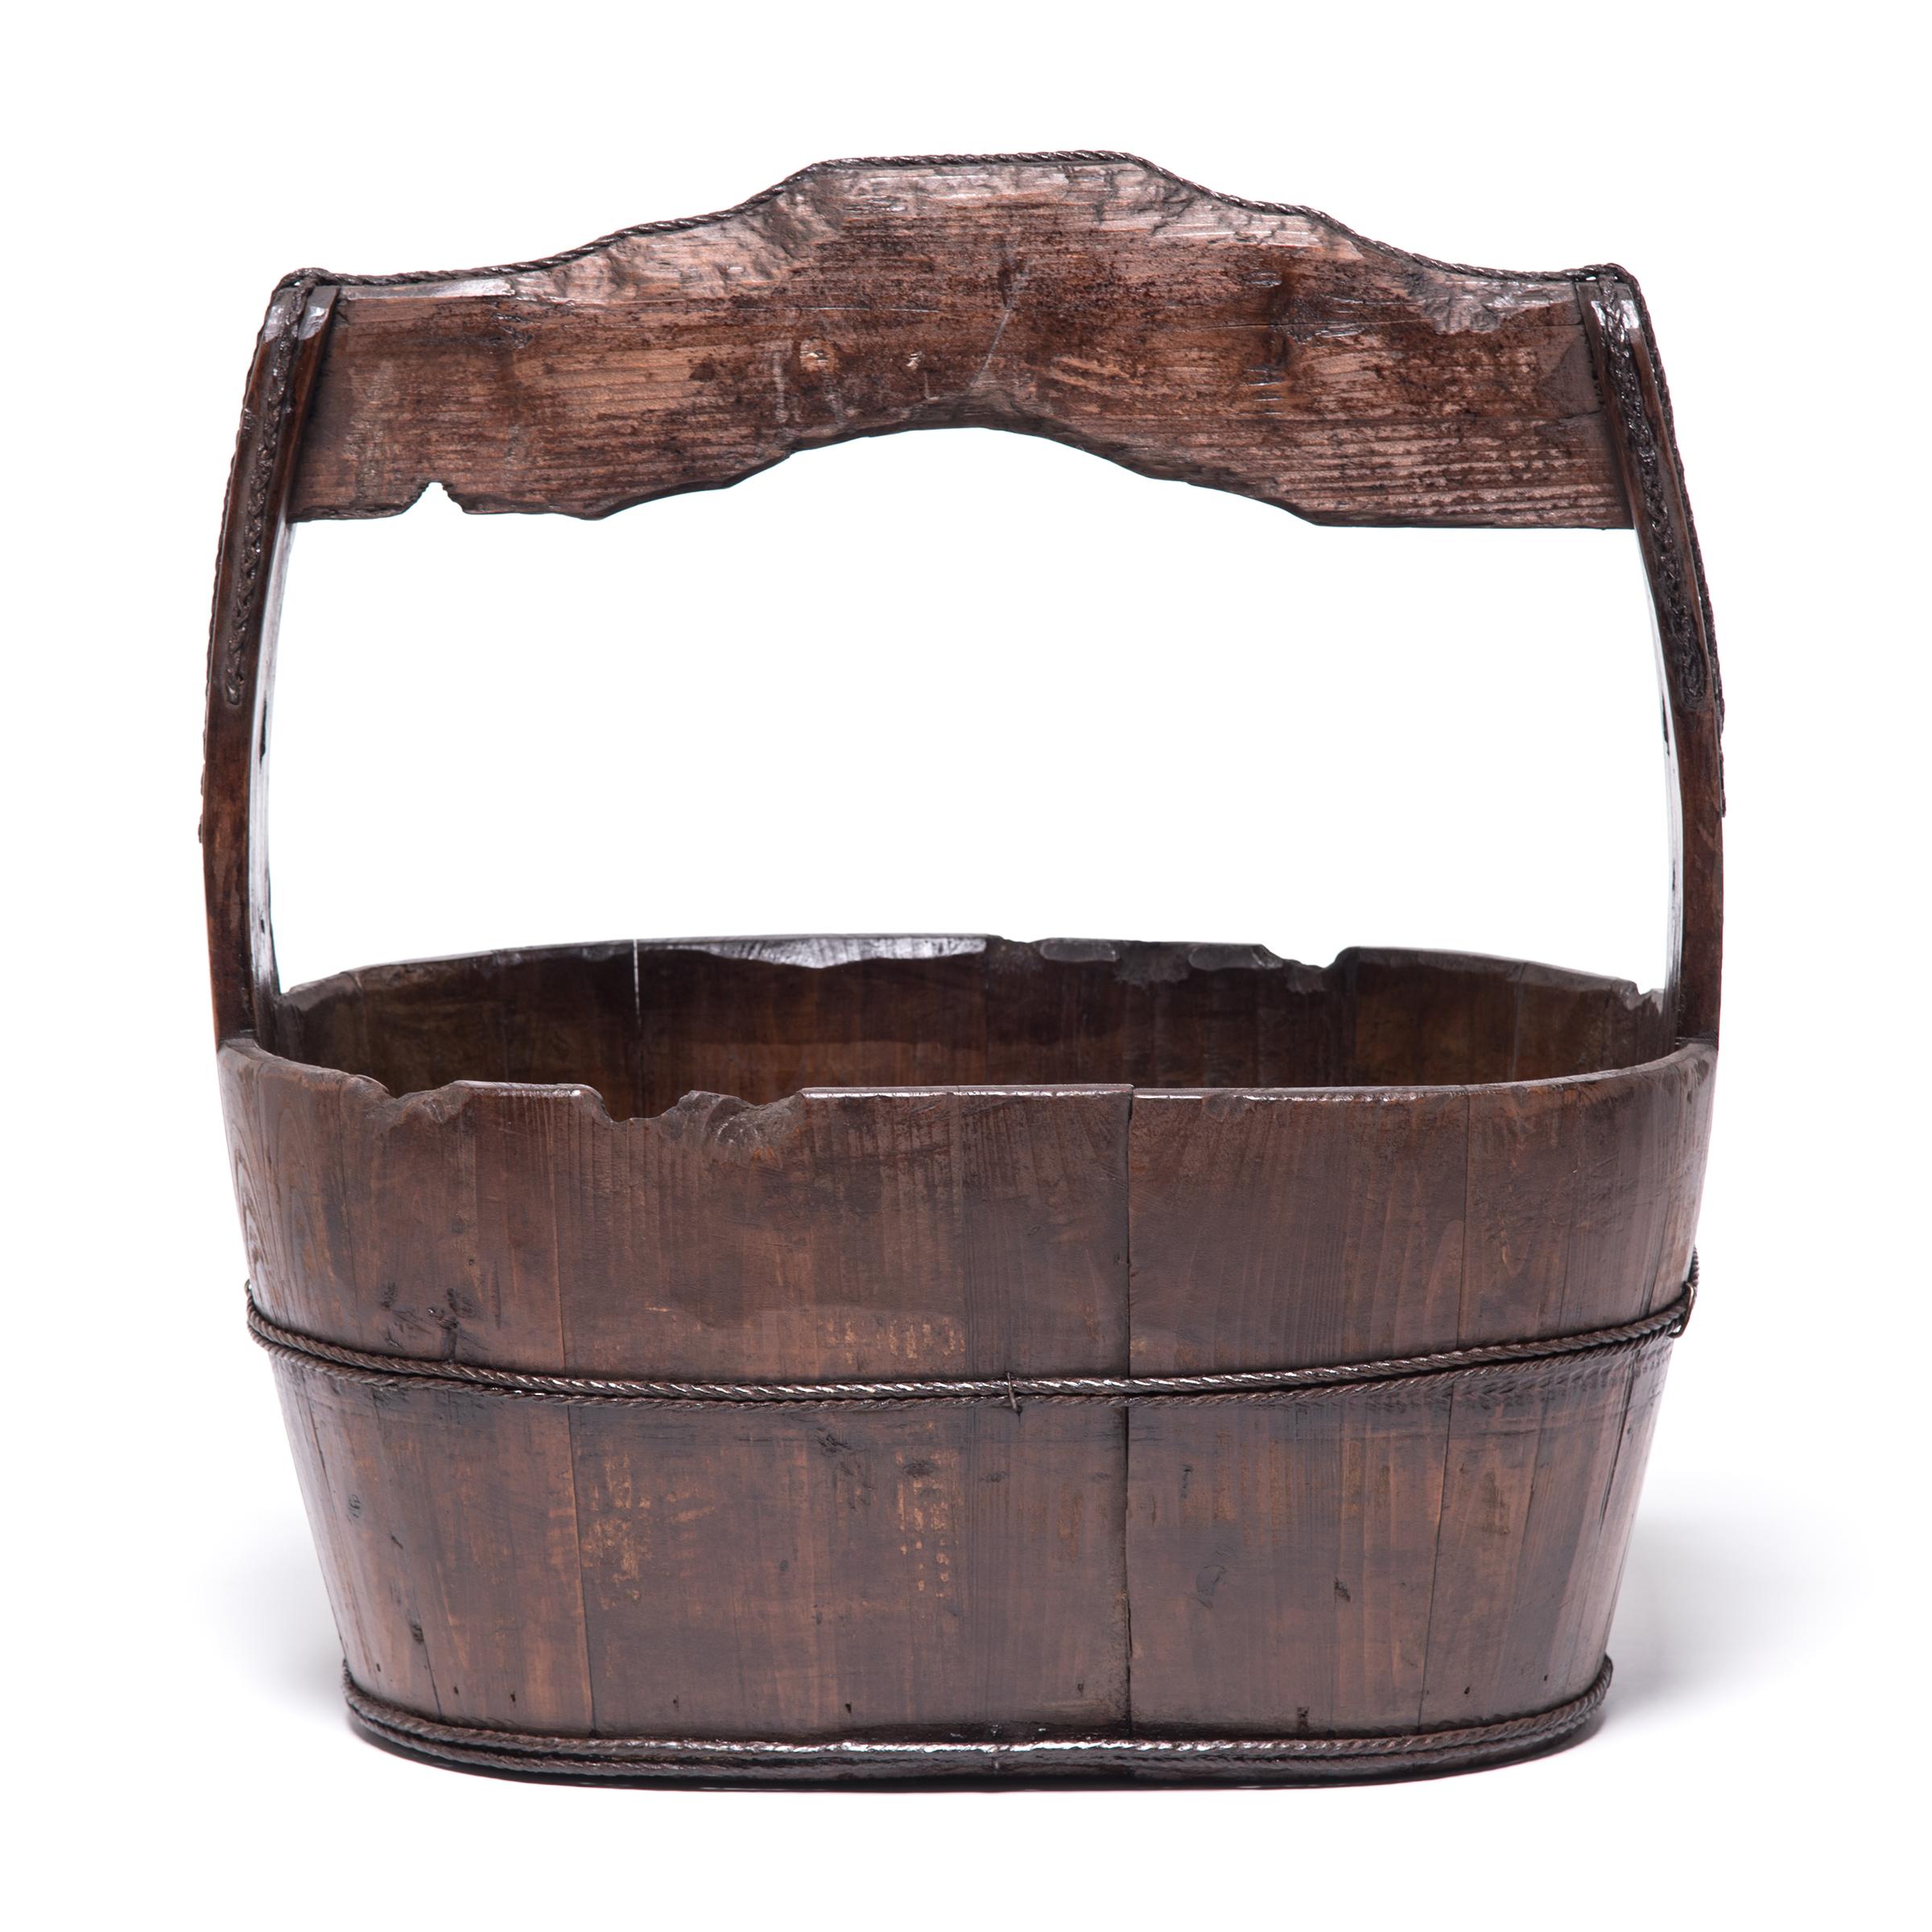 Rustic Chinese Burden Bucket, circa 1850